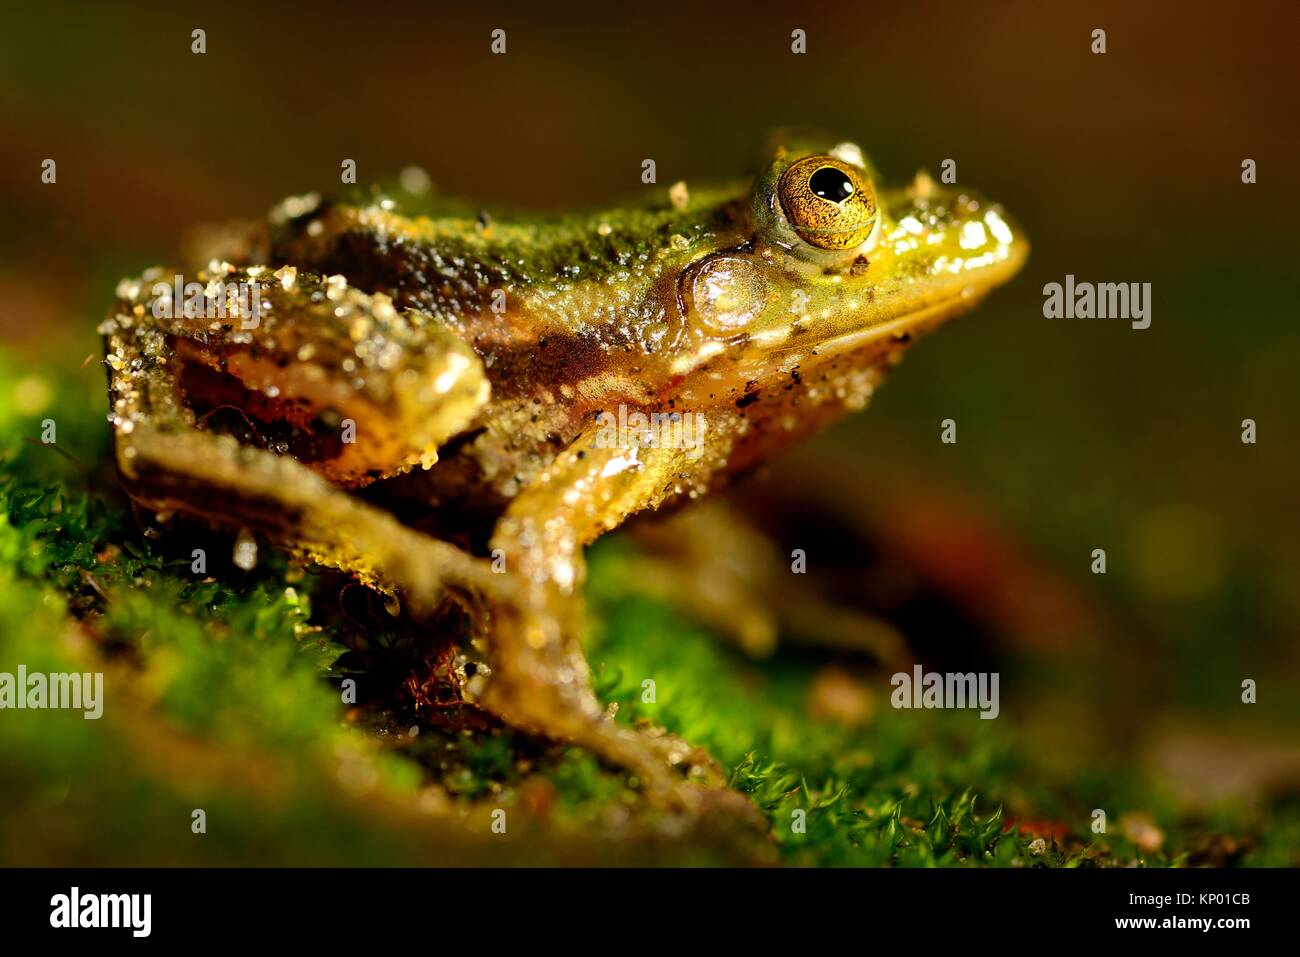 Young common frog (Euphlyctis aloysii) in Fort Kochi, Kerala, India. Stock Photo